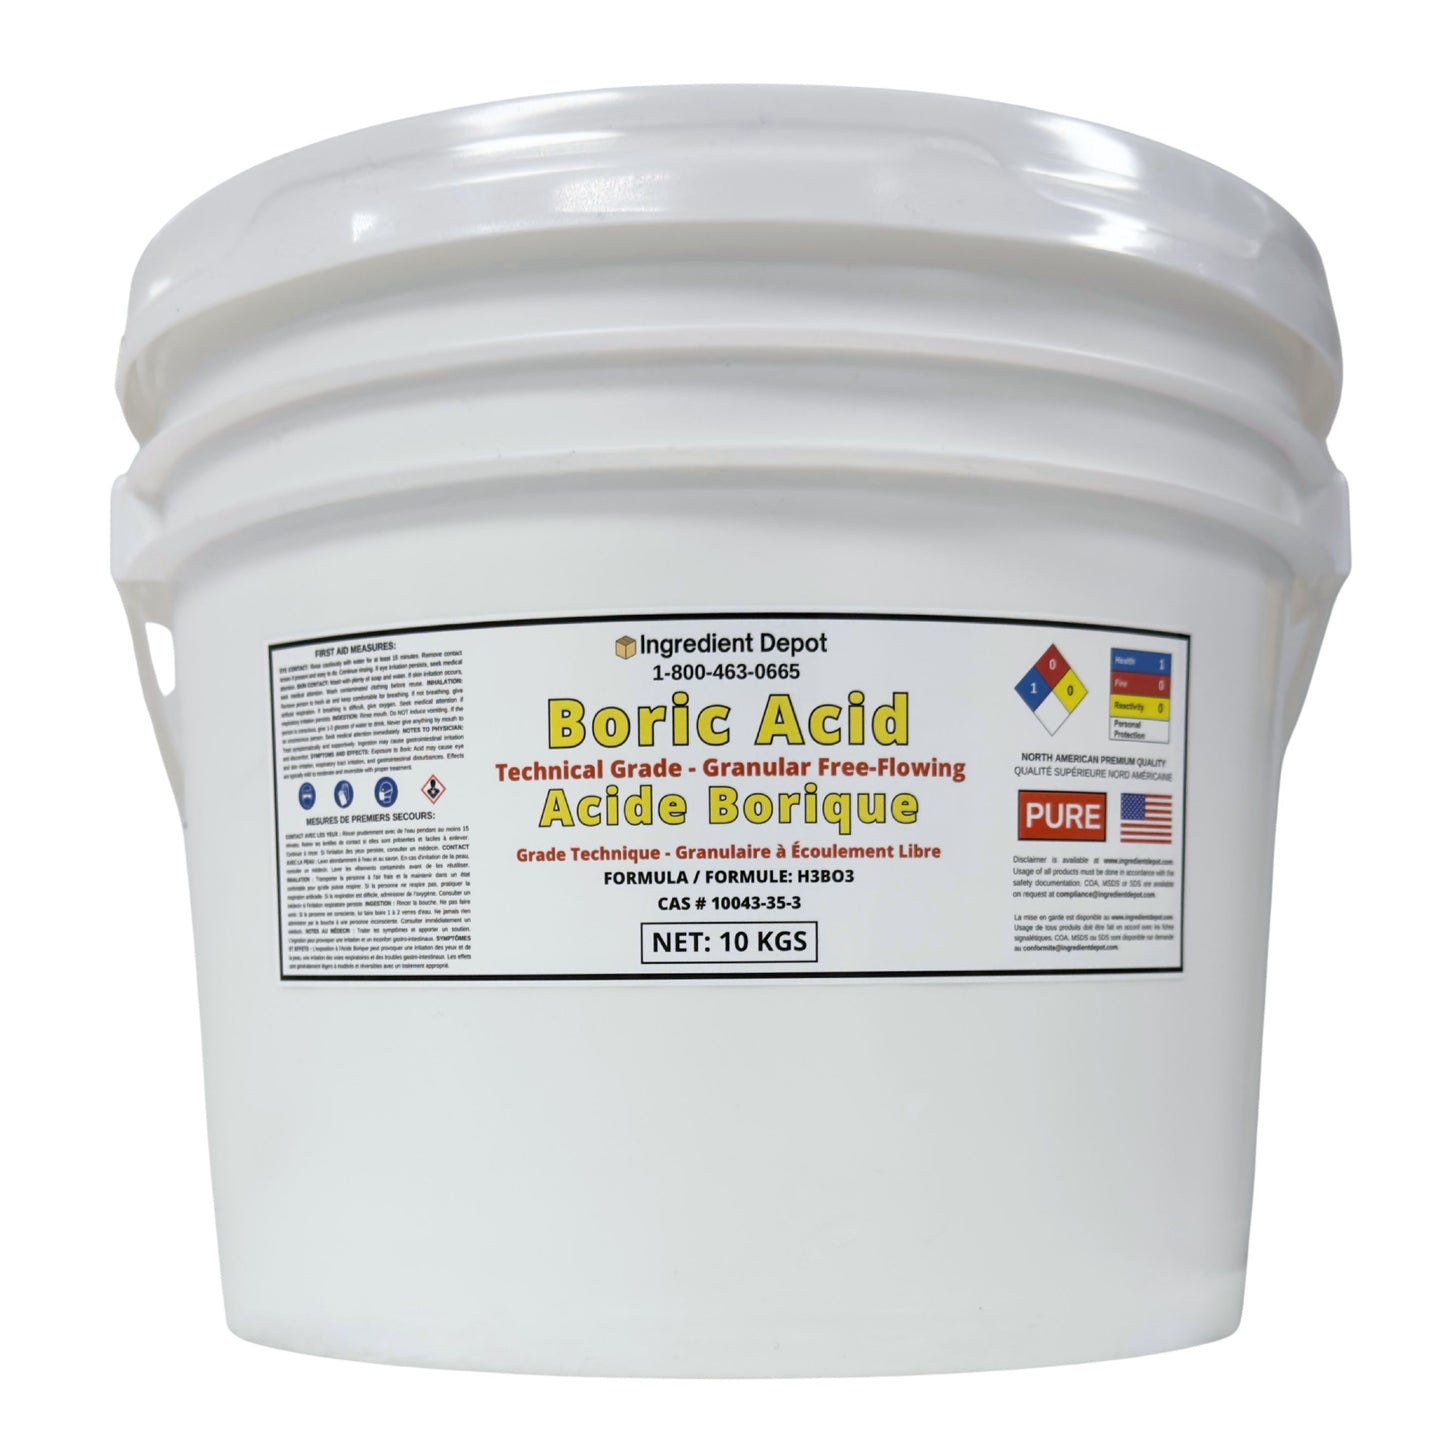 Boric Acid Technical Grade & Granular Free-Flowing 10 kgs